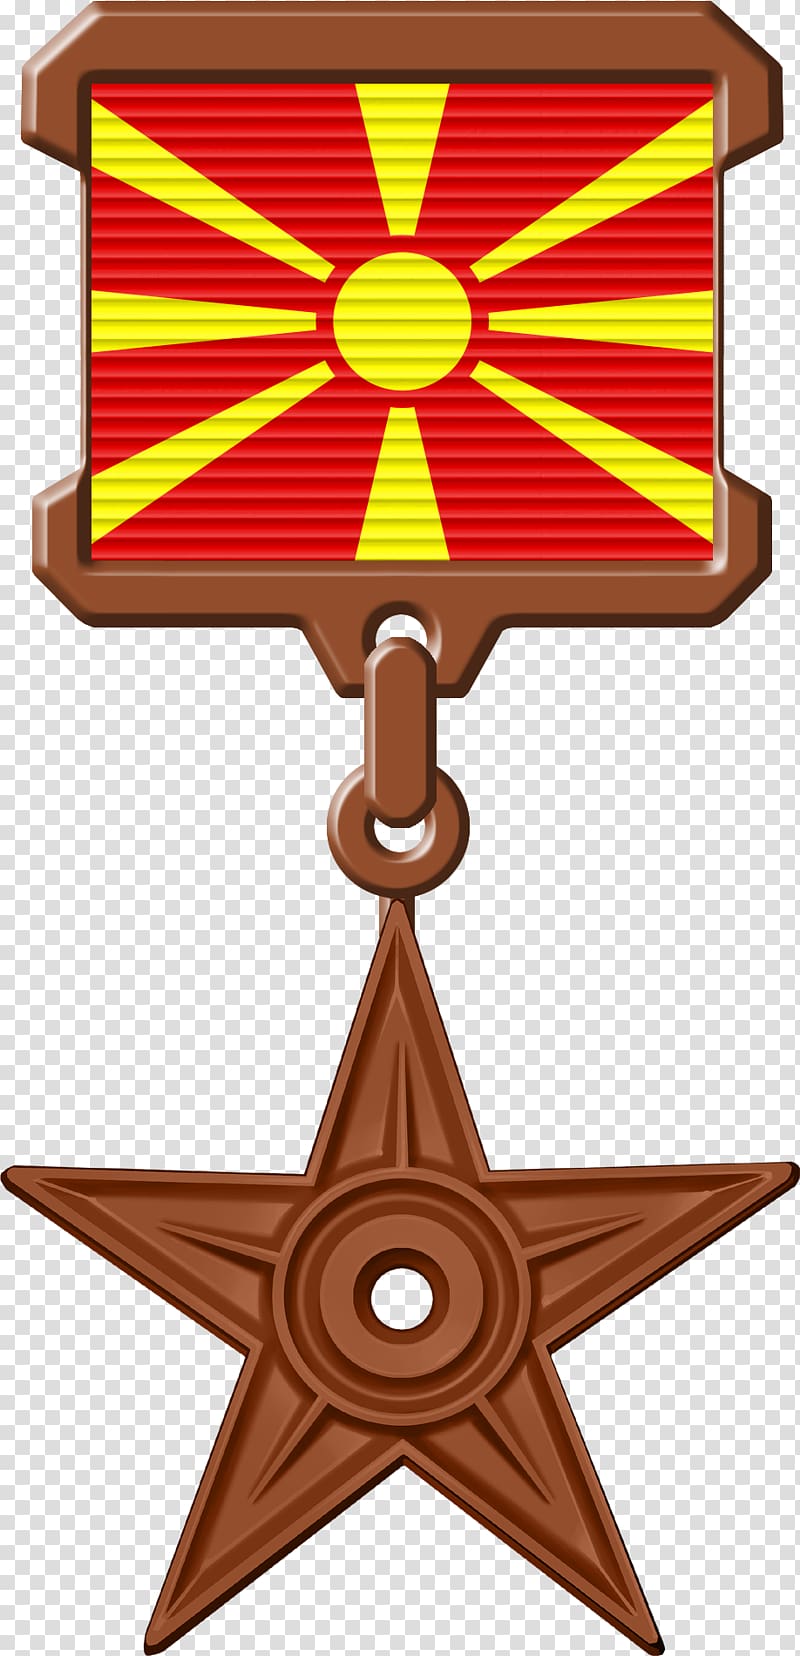 Communism Communist symbolism Hammer and sickle Red star , republic transparent background PNG clipart